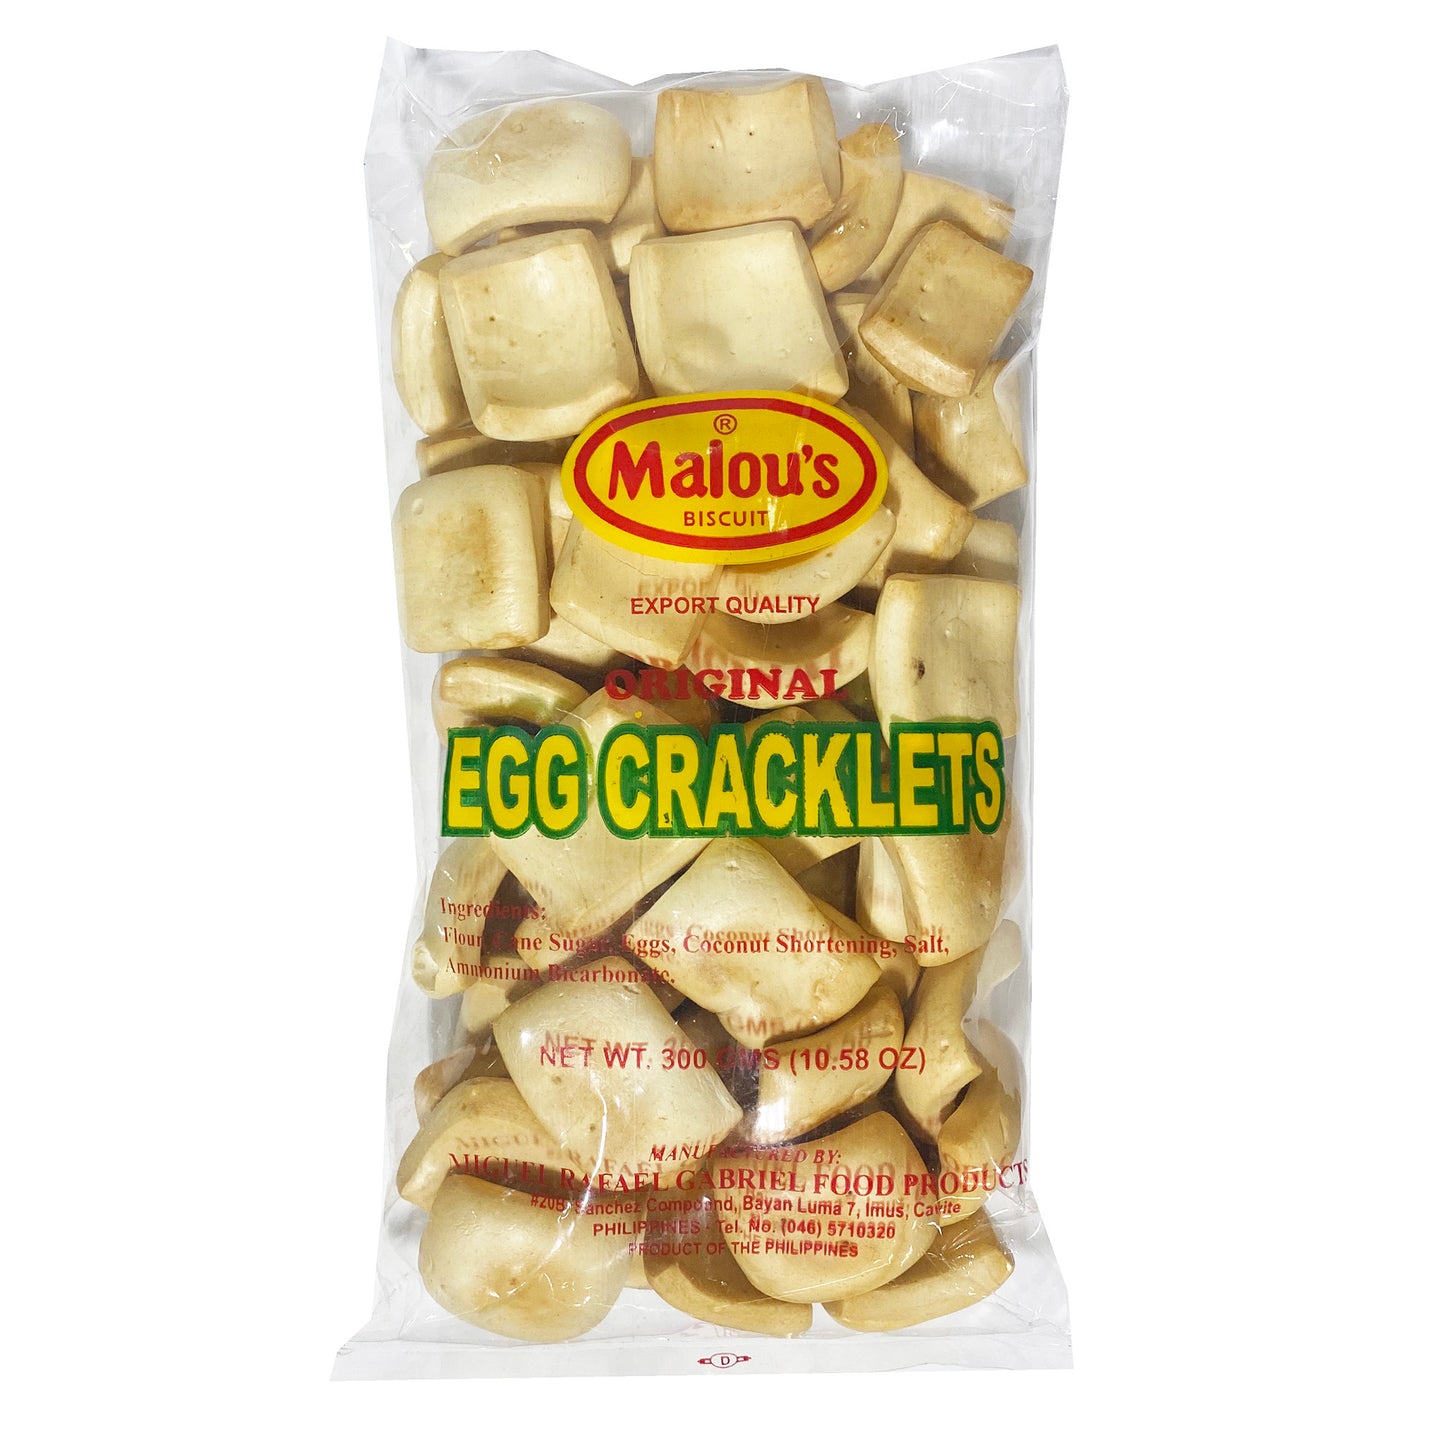 Front graphic image of Malou's Egg Cracklet 10.58oz